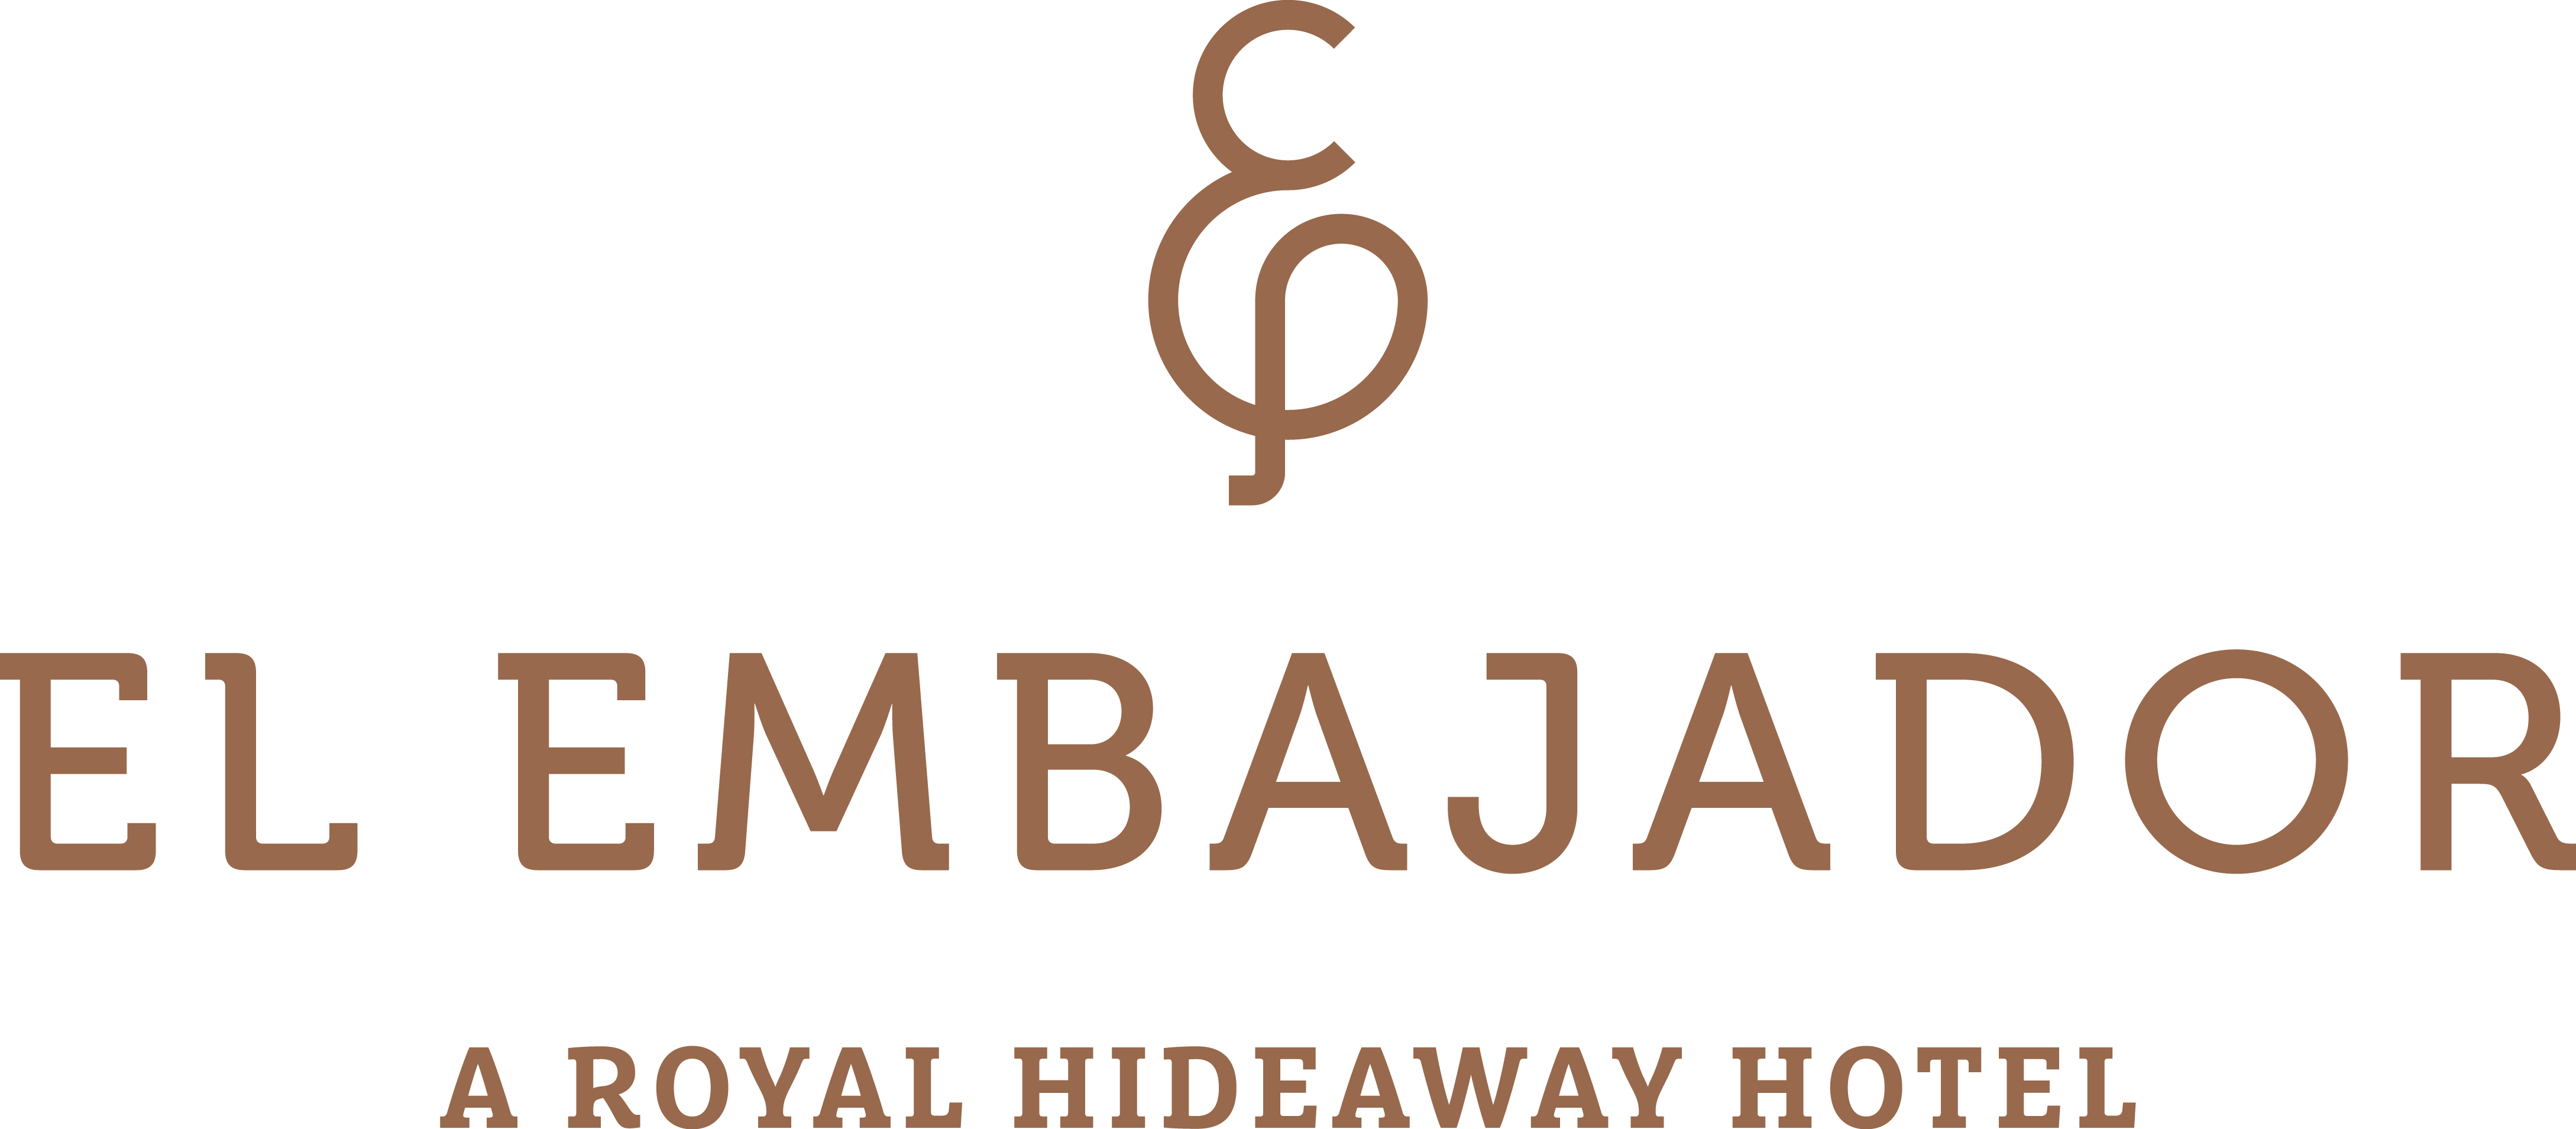 Embajador Royal Hideaway Hotel